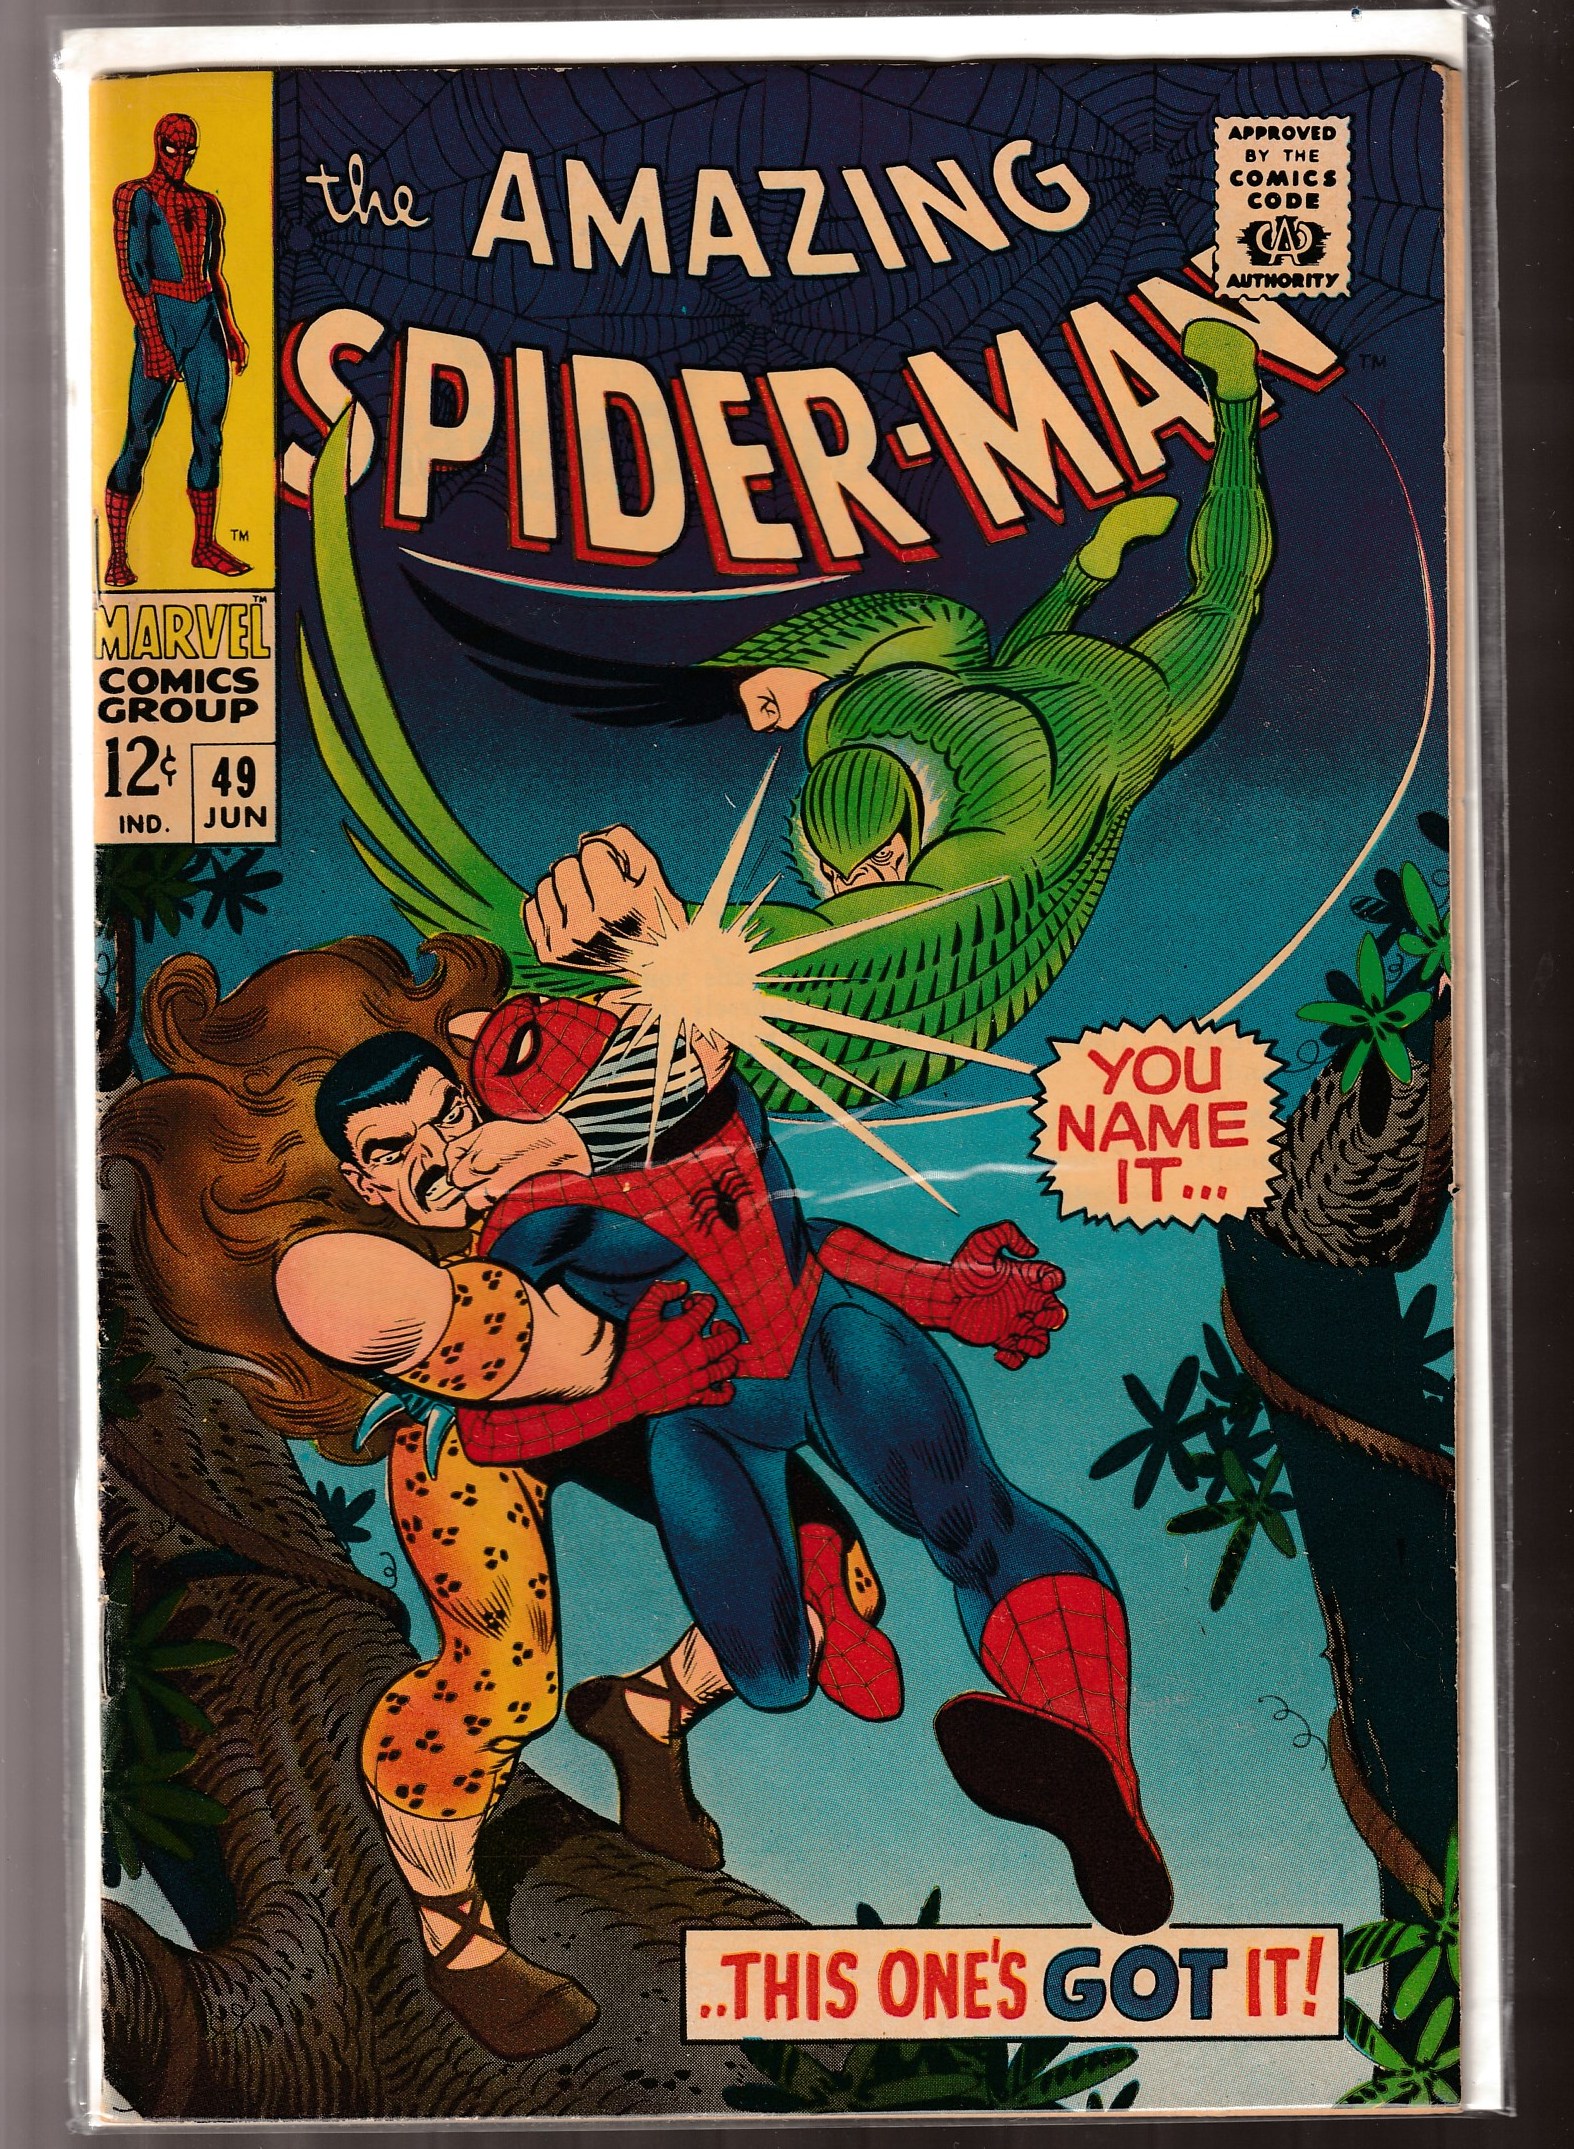 Comic: AMAZING SPIDER-MAN # 49 (1967) vs Vulture & Kraven